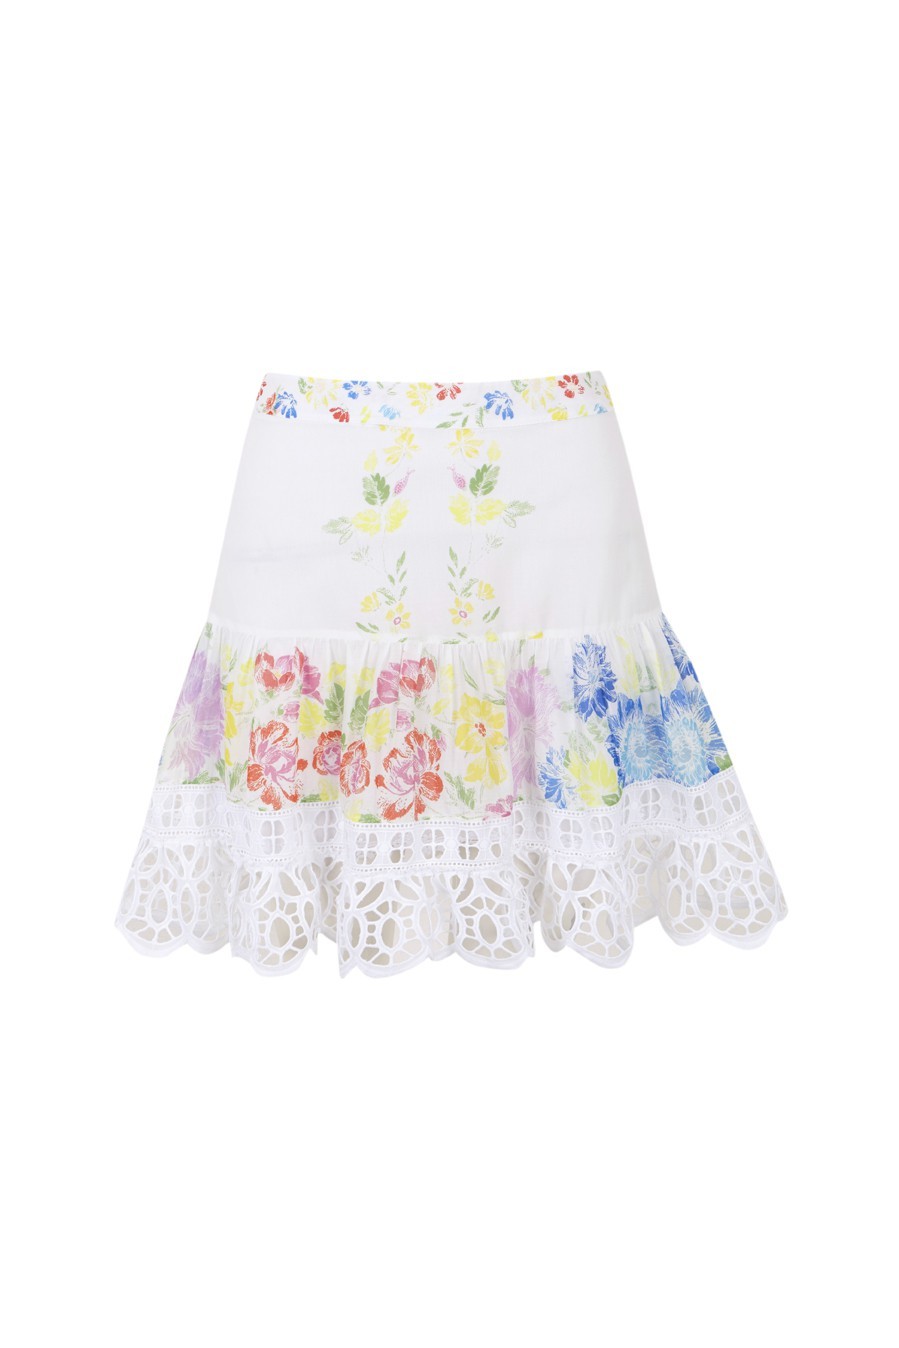 Eibis short skirt